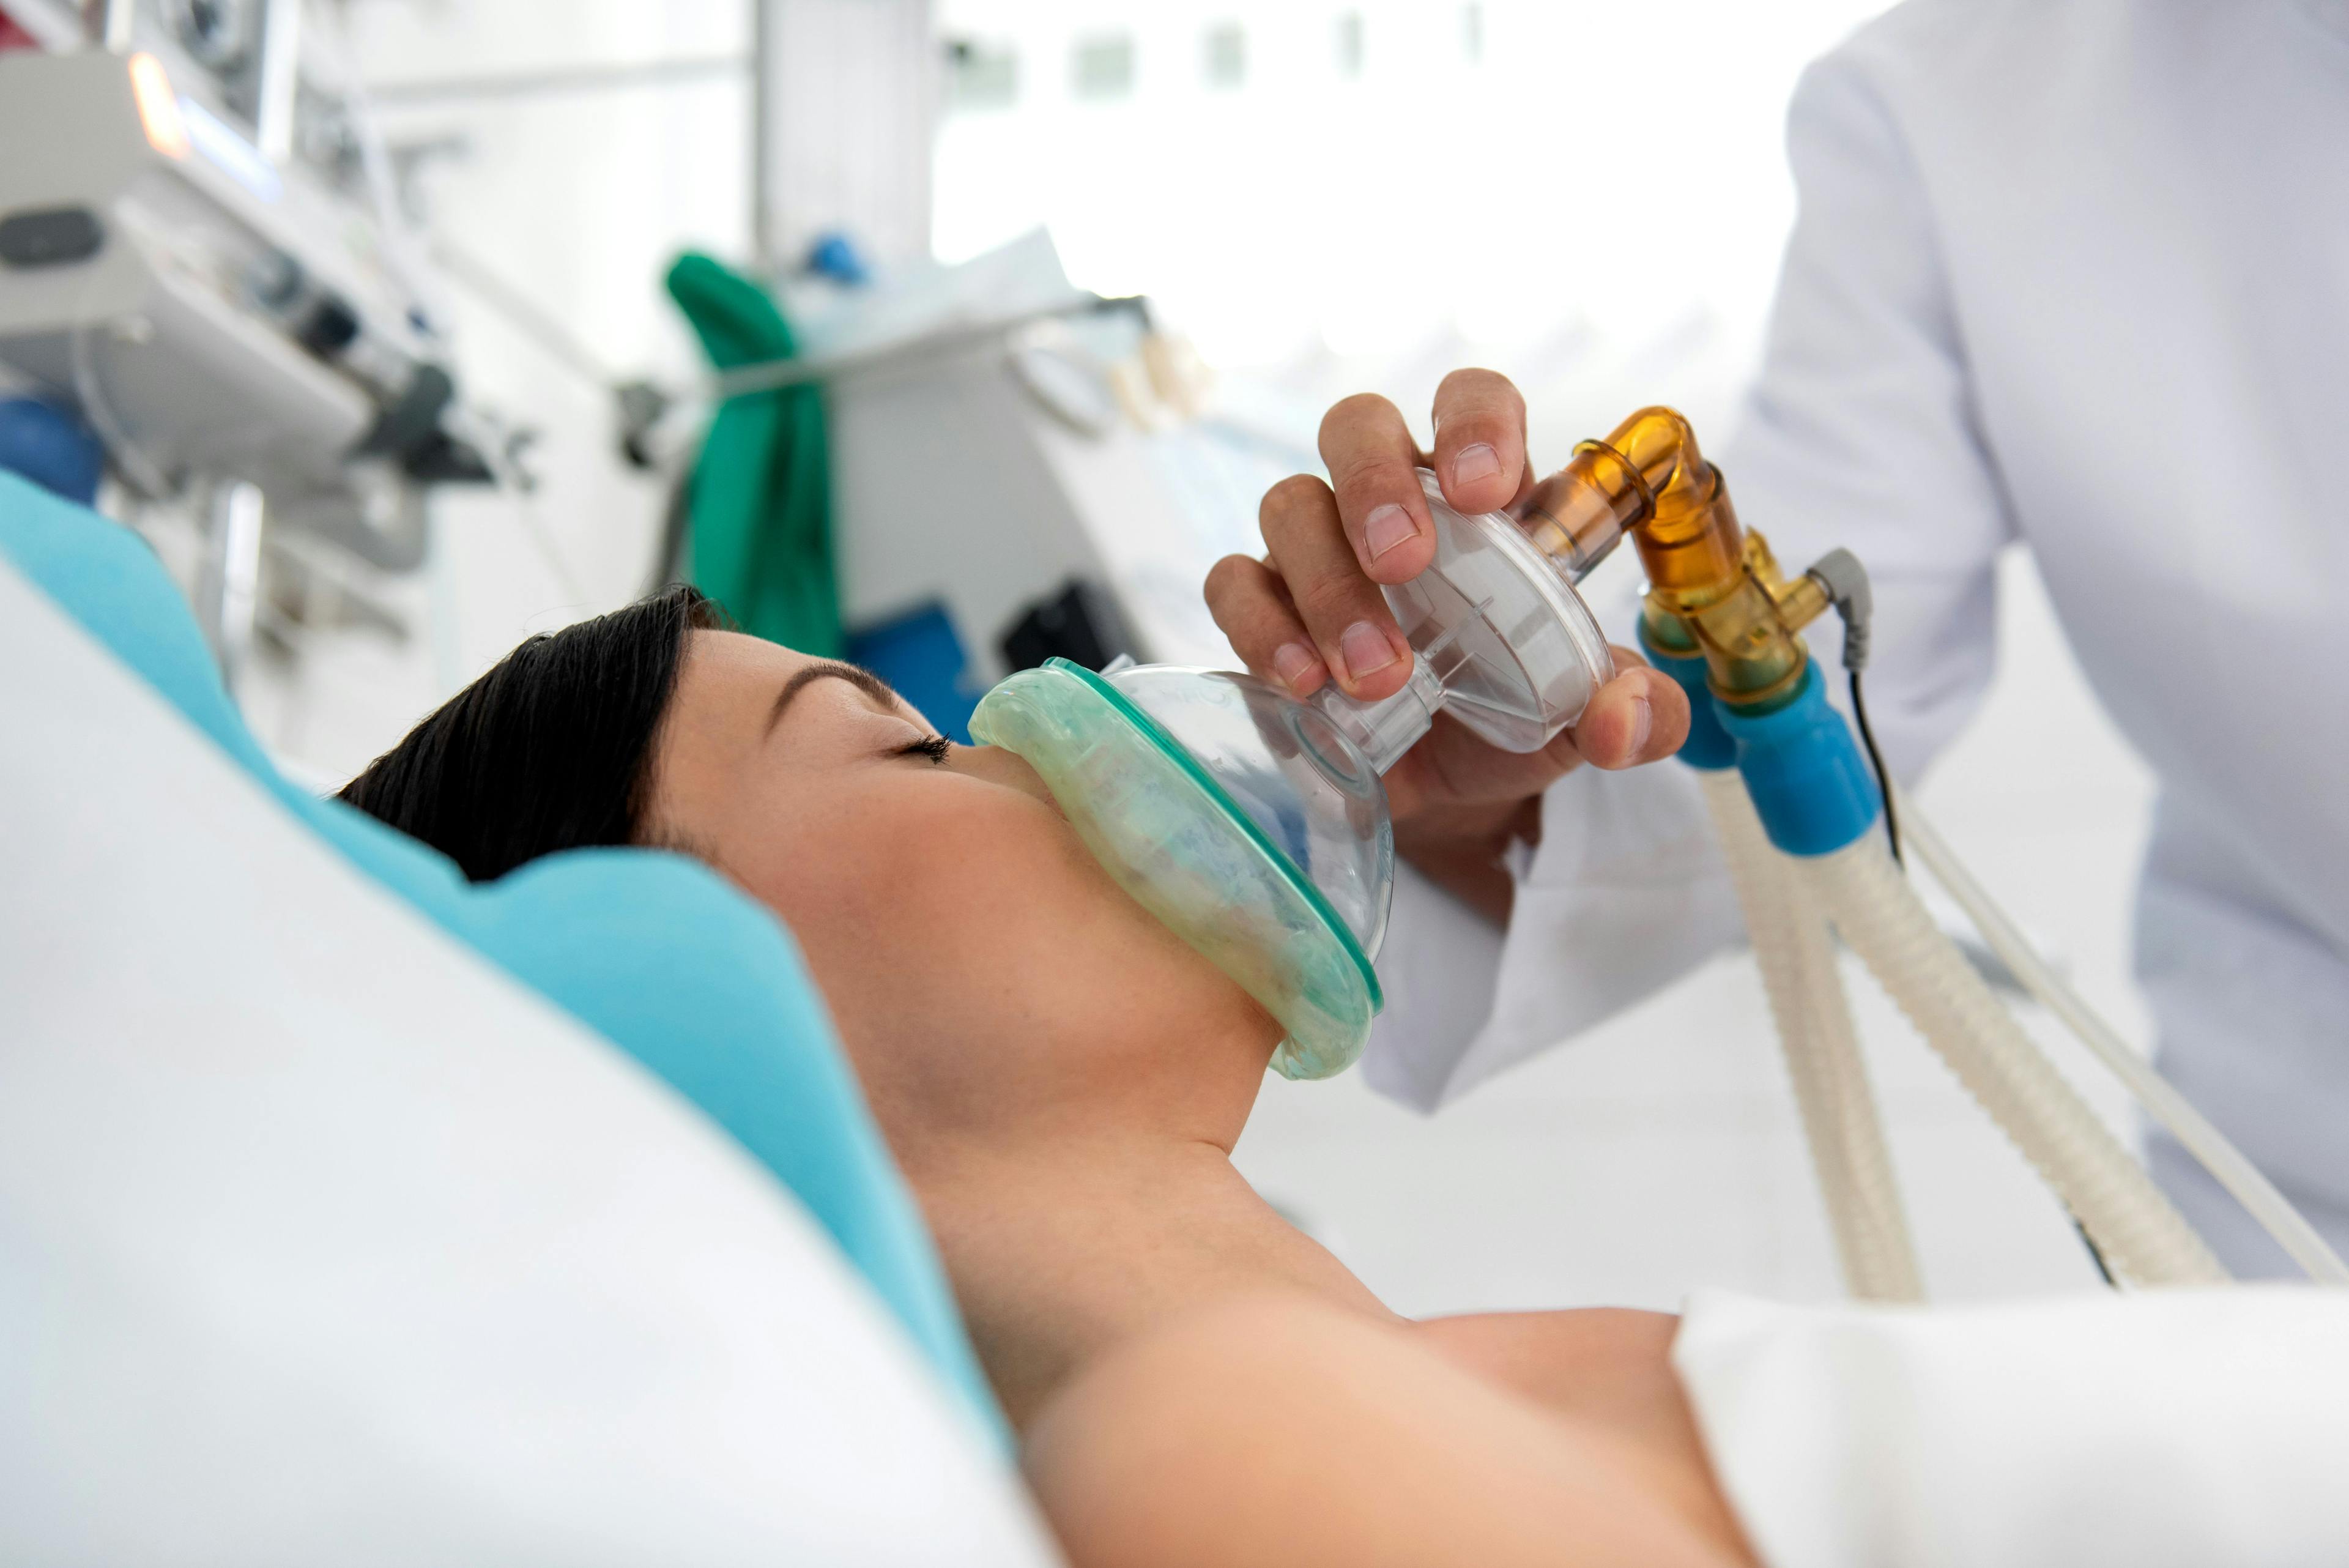 FDA takes action to increase ventilator availability